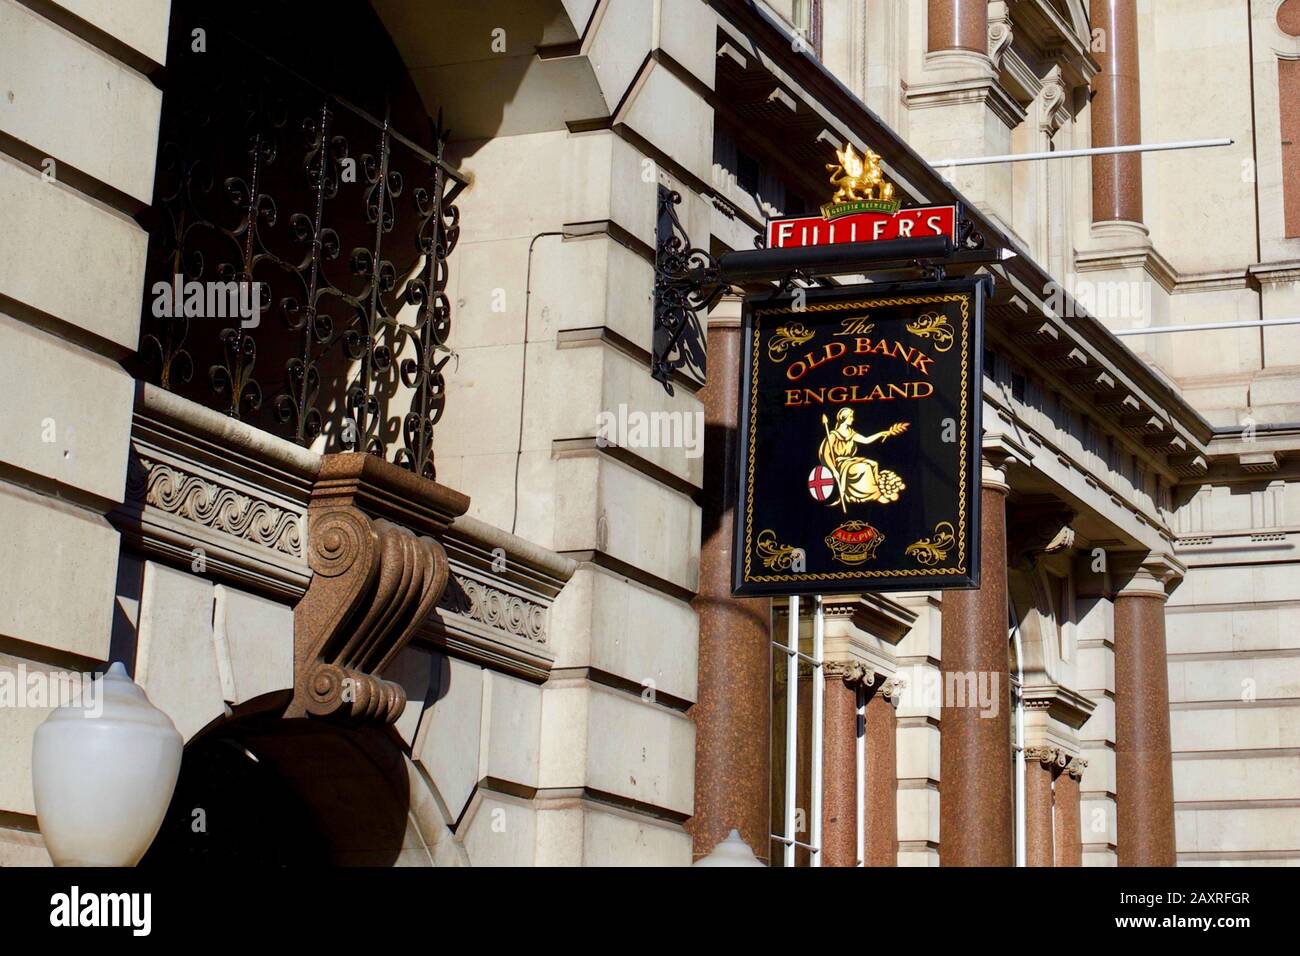 The Old Bank of England pub, Fleet Street, City of London, London, England. Stock Photo